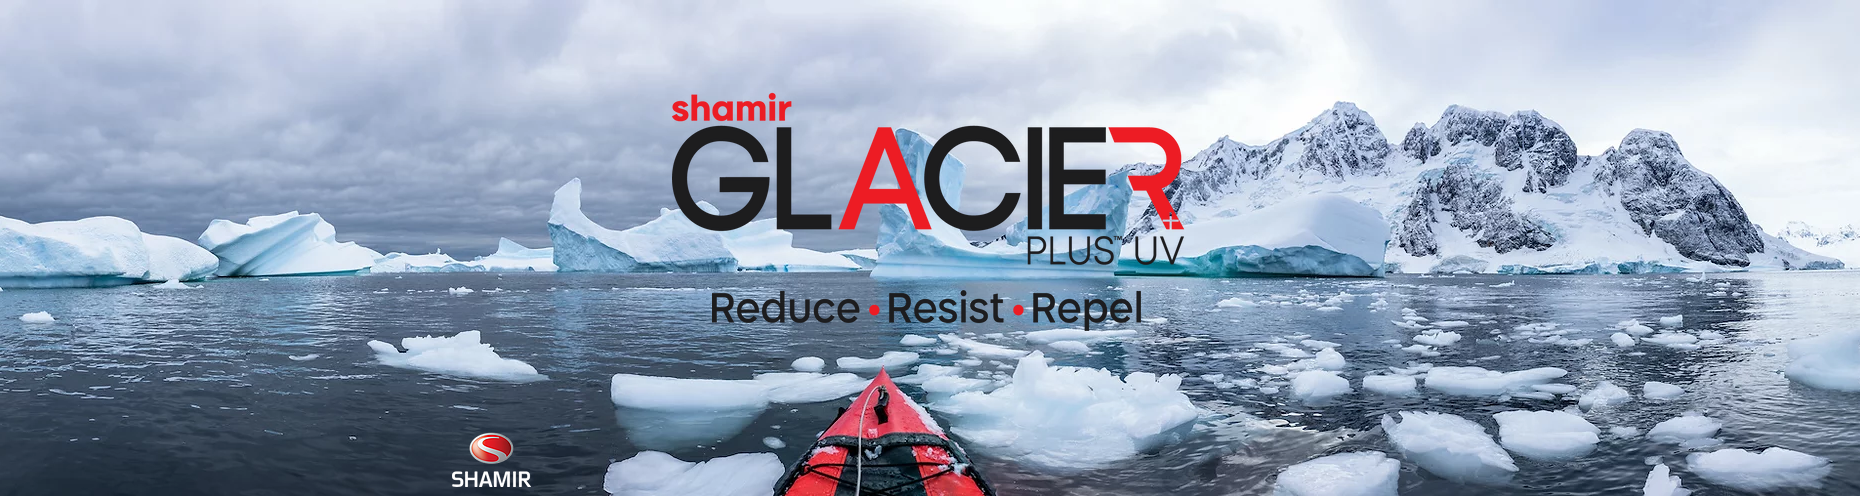 Reduce, Resist, &#038; Repel with Glacier PLUS UV